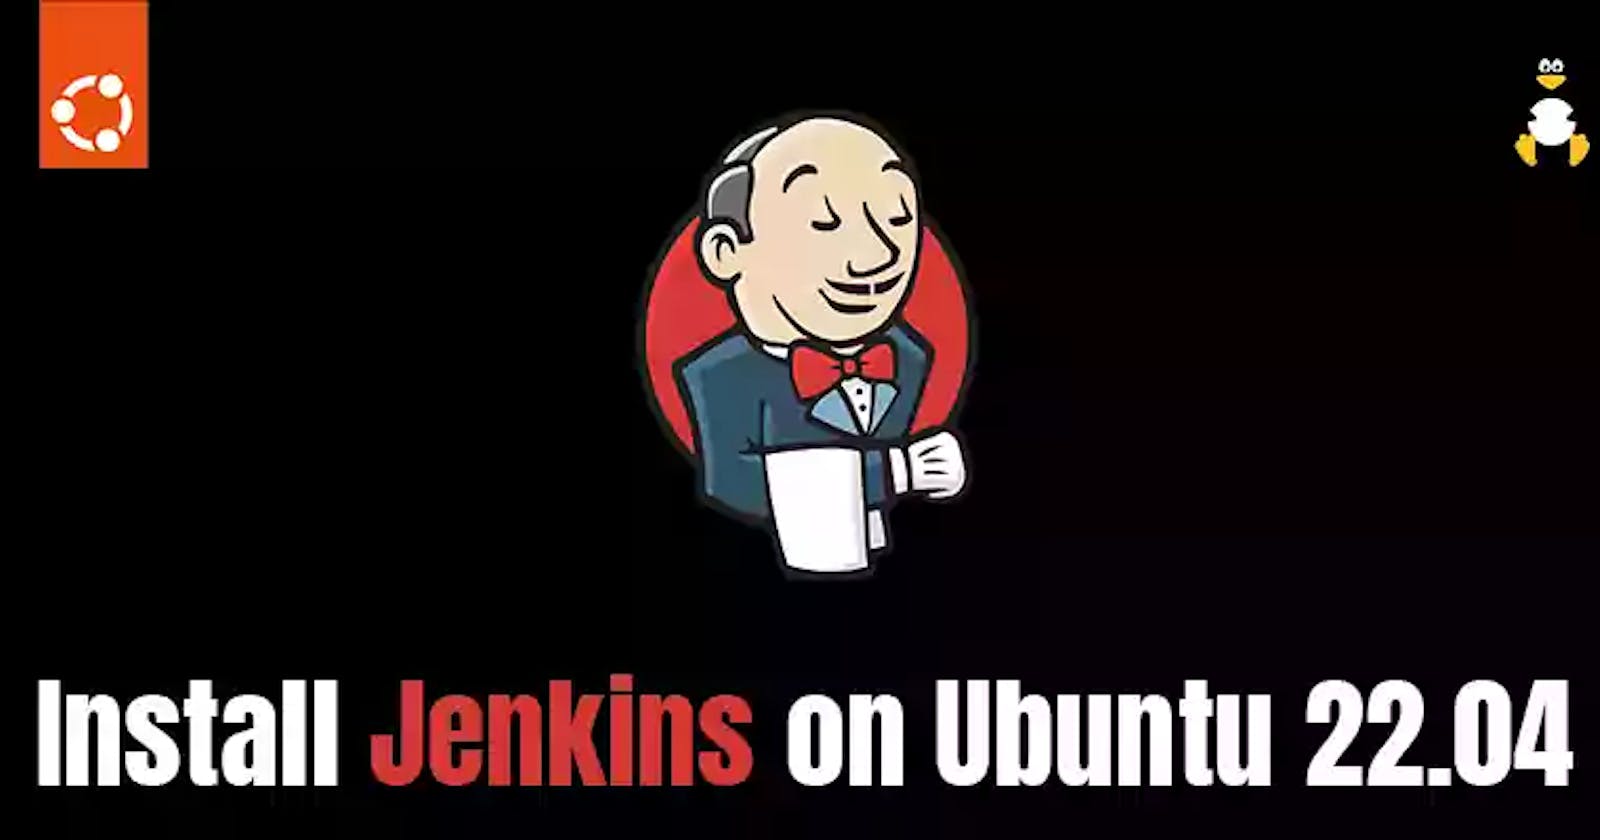 Install Jenkins on Ubuntu 22.04 LTS